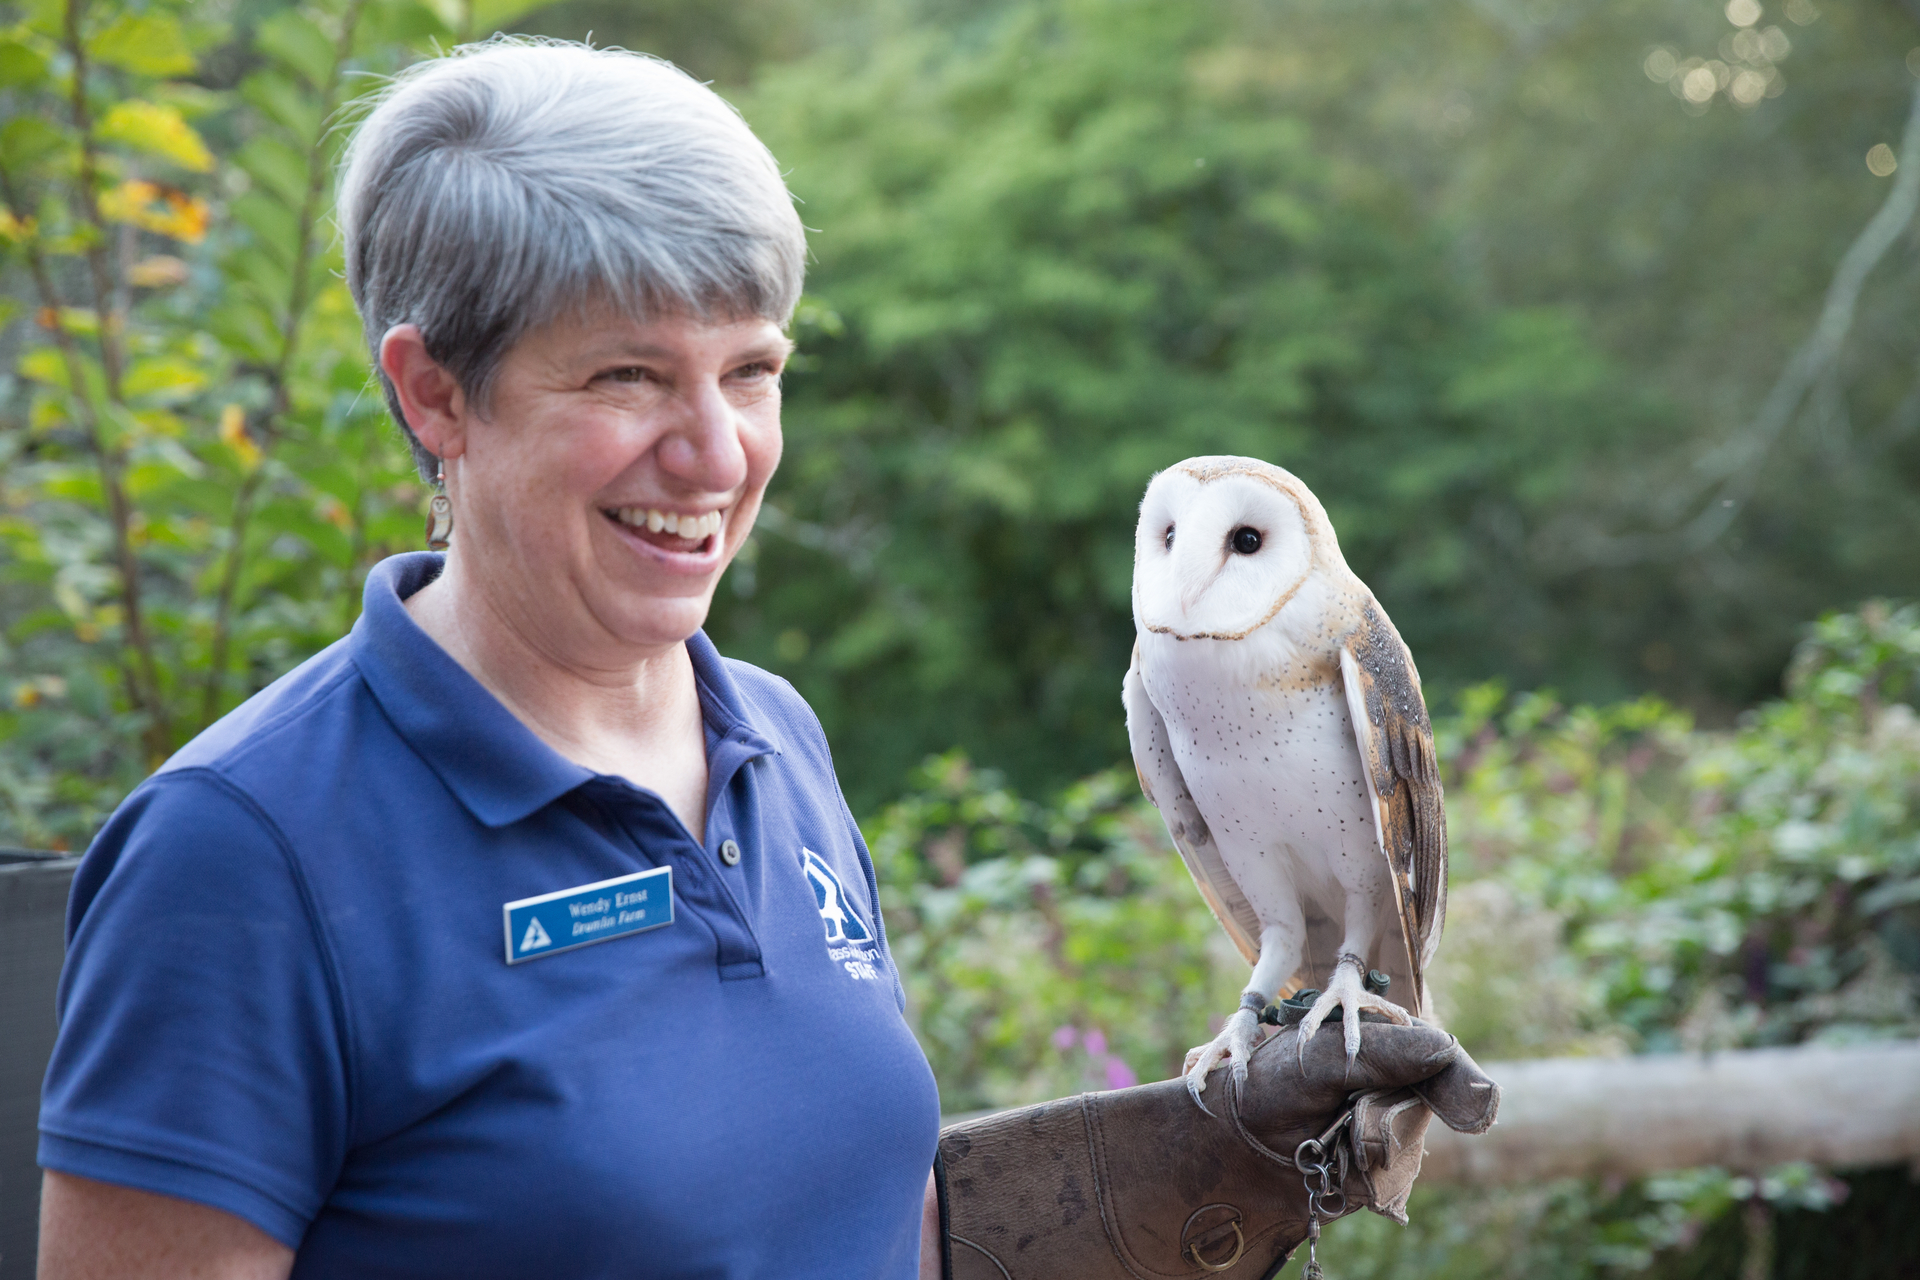 Mass Audubon staff smiling and holding owl